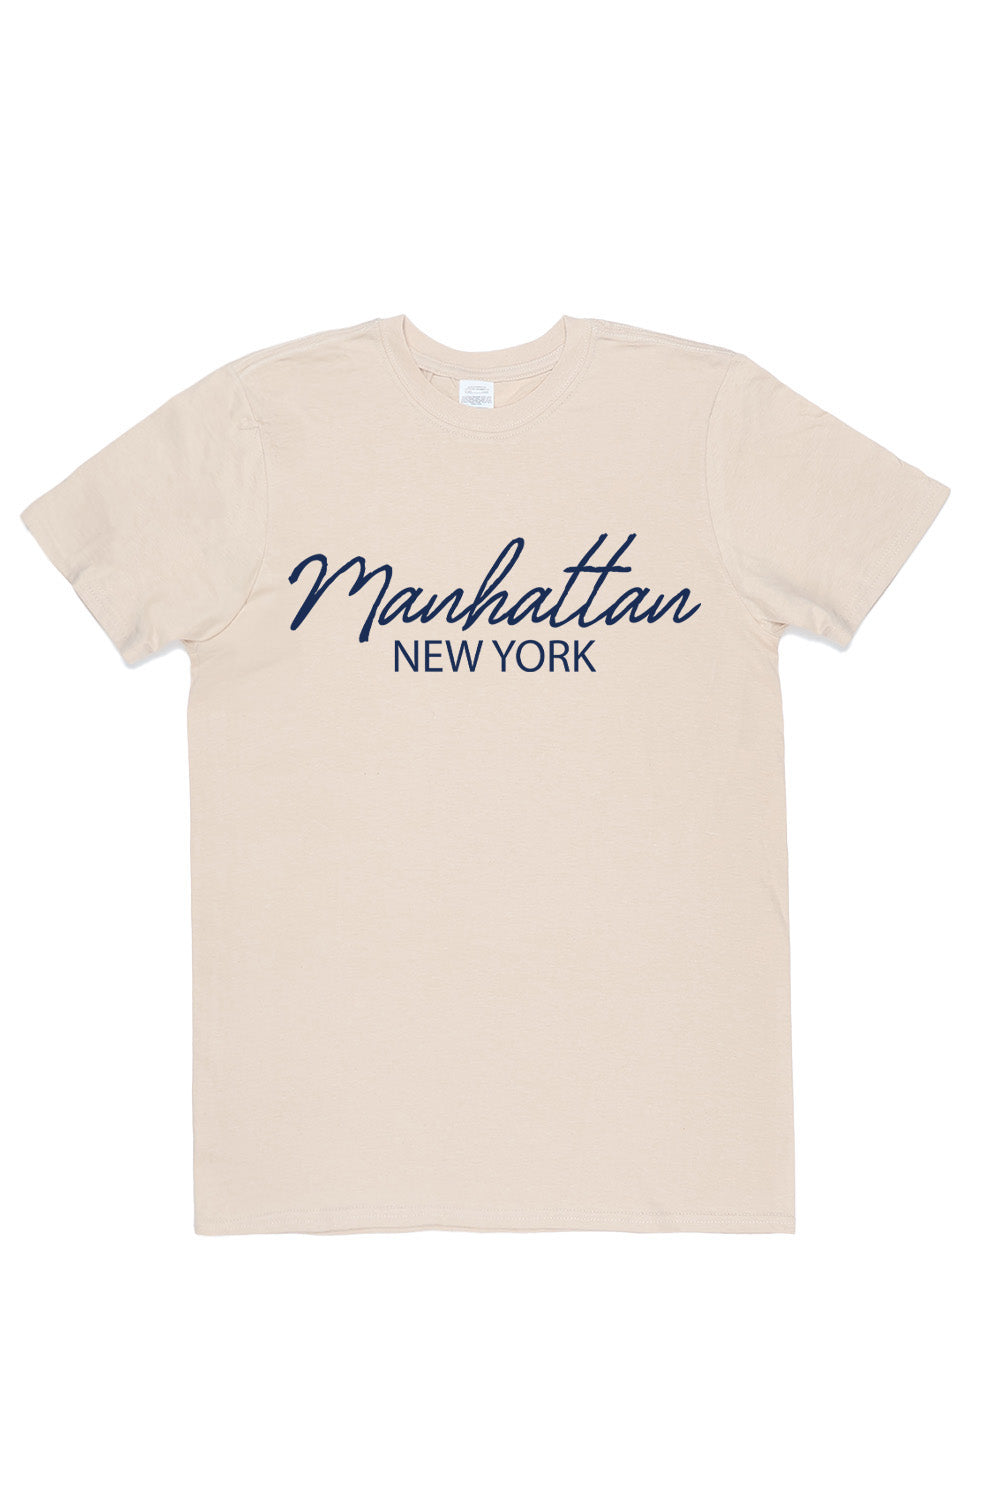 Manhattan T-Shirt in Sand (Custom Packs)